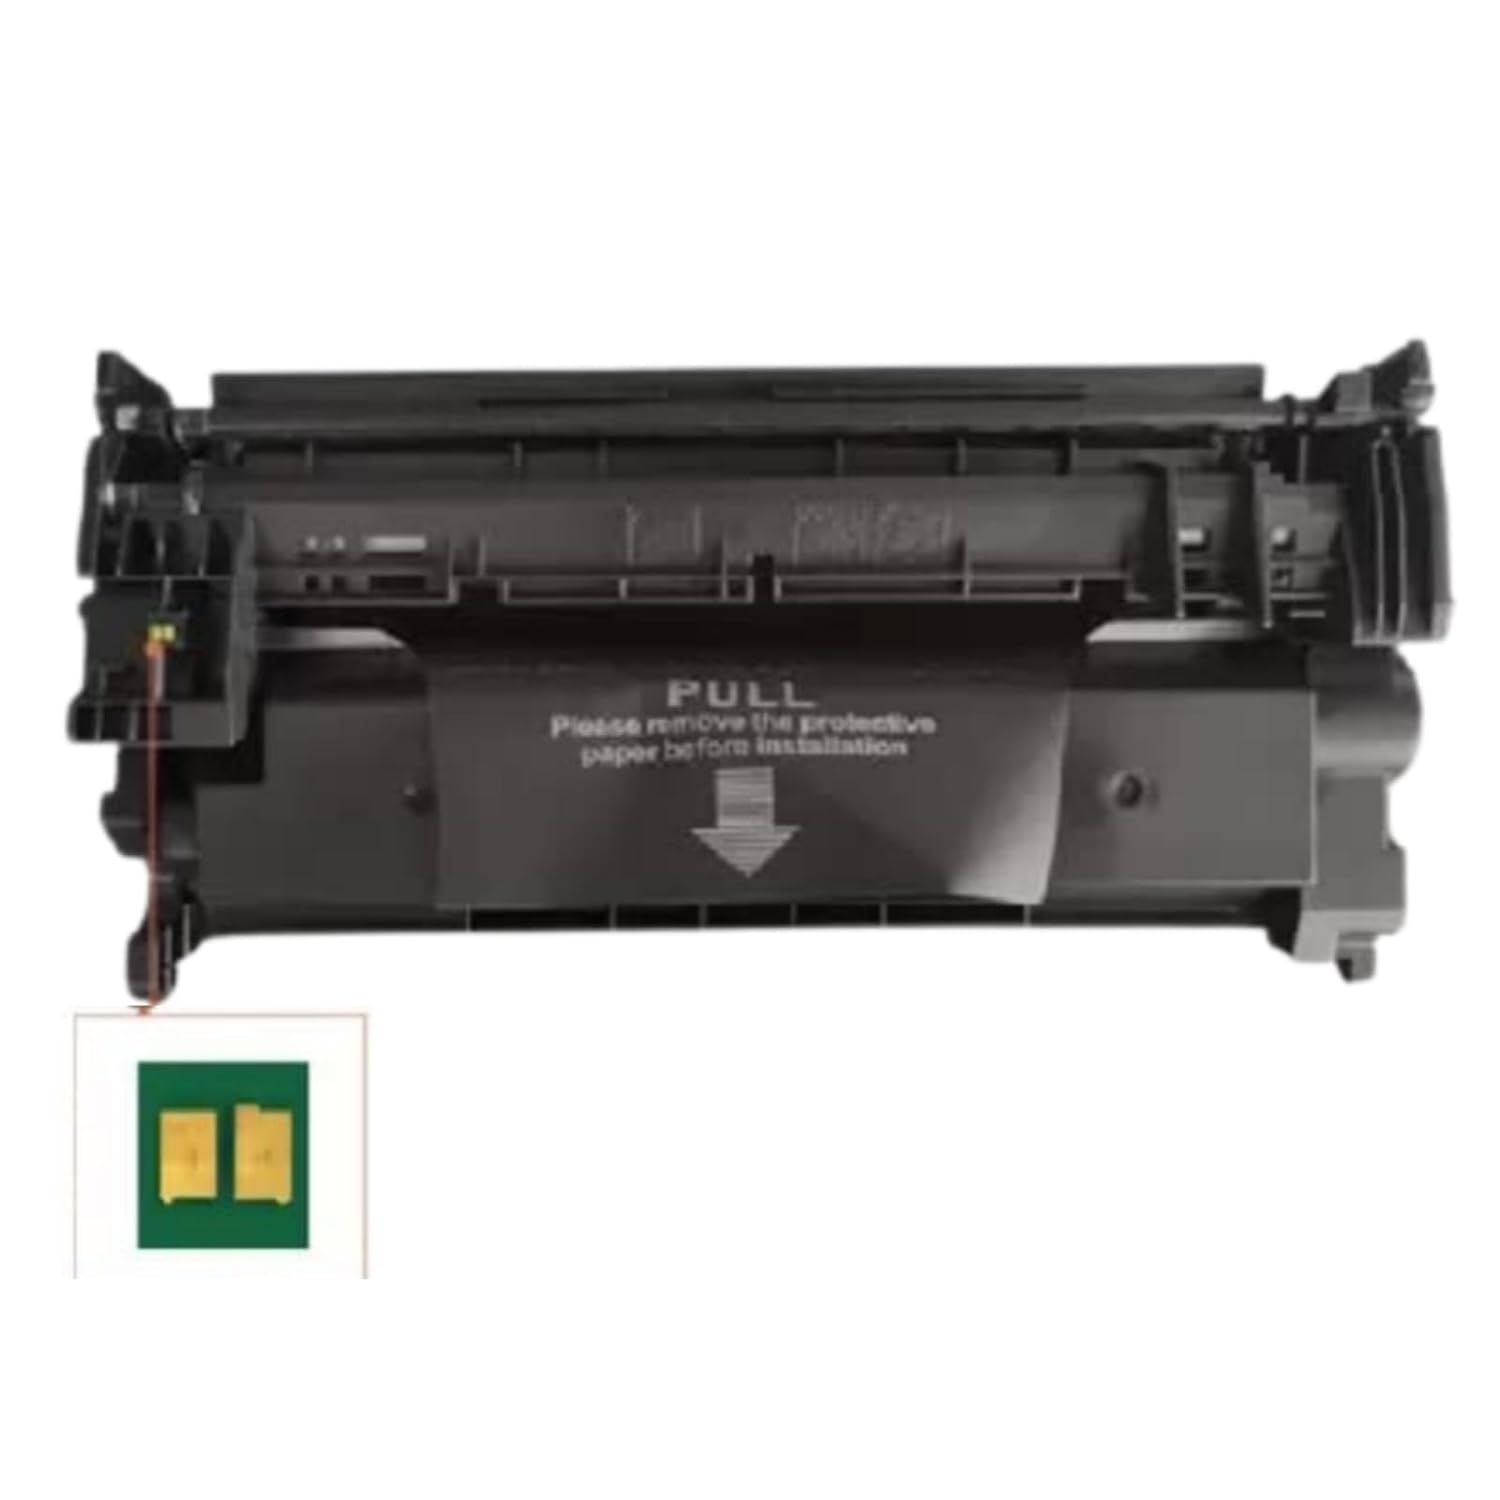 77A Black / CF277A Toner Cartridge for HP M305, M329, M405, M407, M429, M429dw, M429fdn, M429fdw, M431 Printers with chip